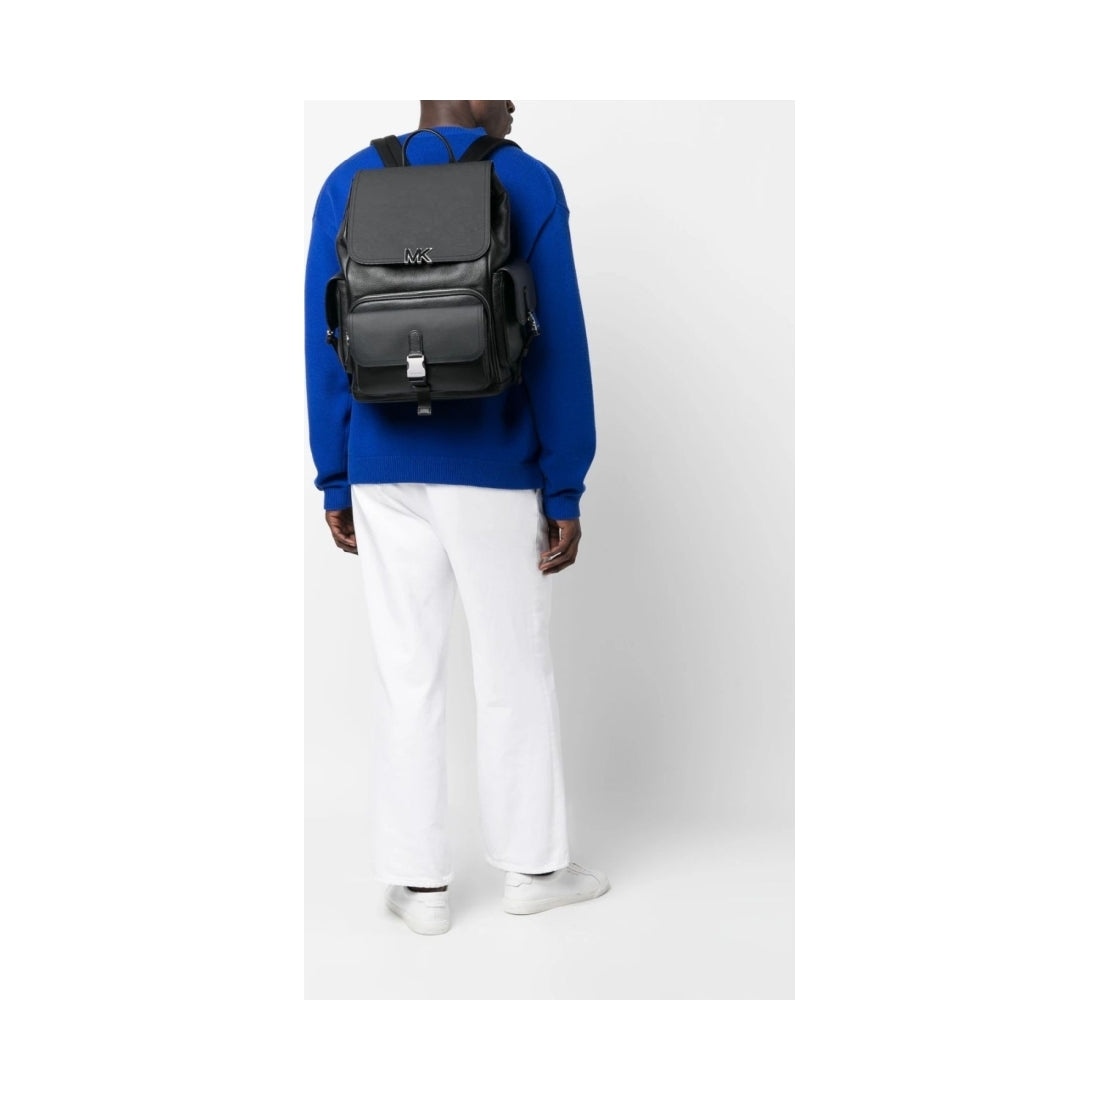 Michael Kors mens black utility rucksack backpack | Vilbury London